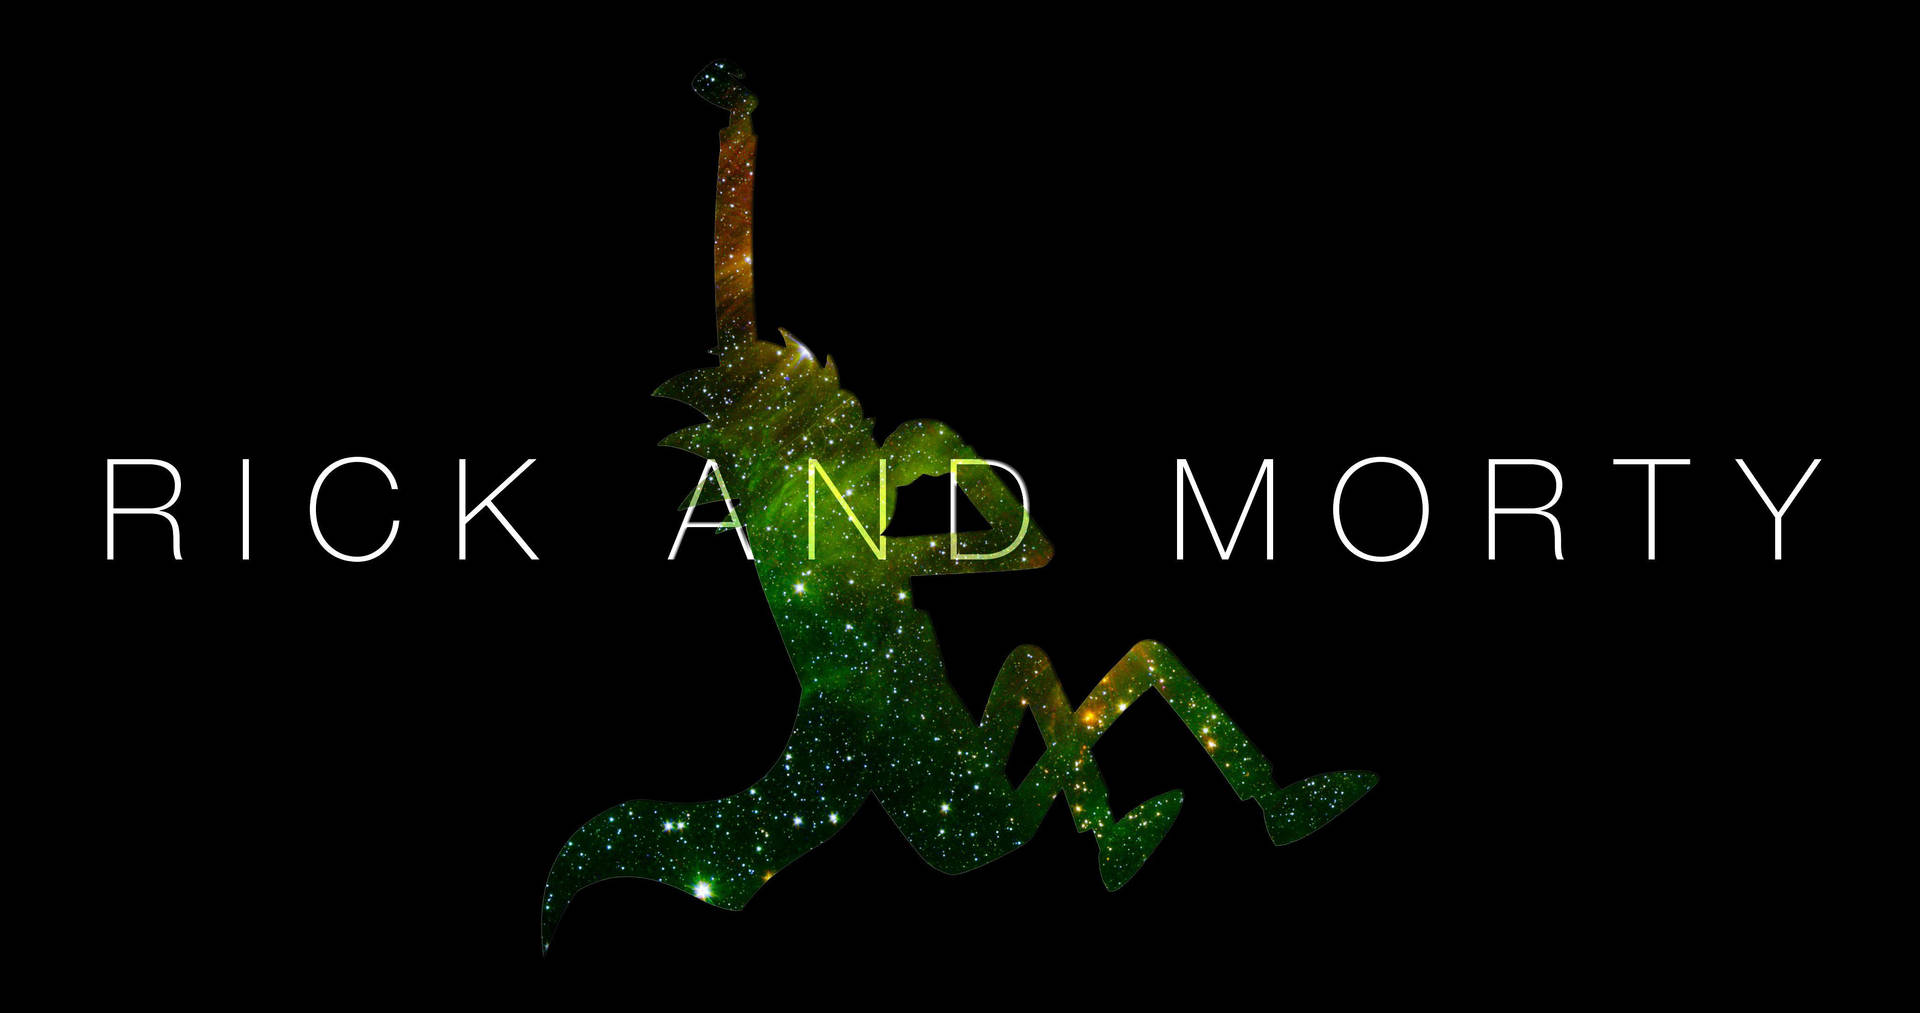 Black Minimalist Rick And Morty 4k